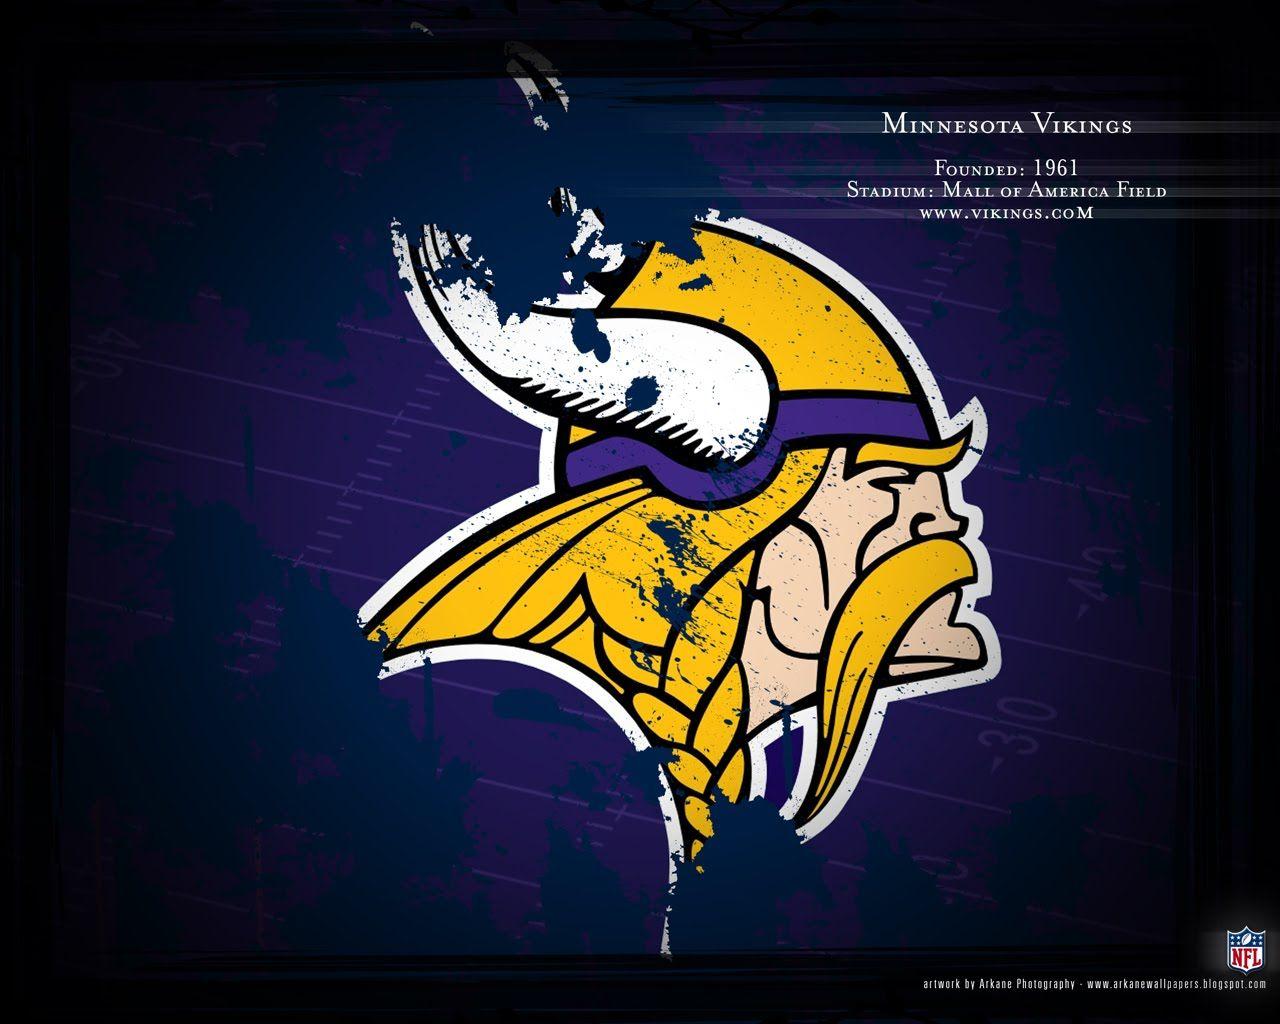 Minnesota Vikings Wallpaper and Background Imagex1024